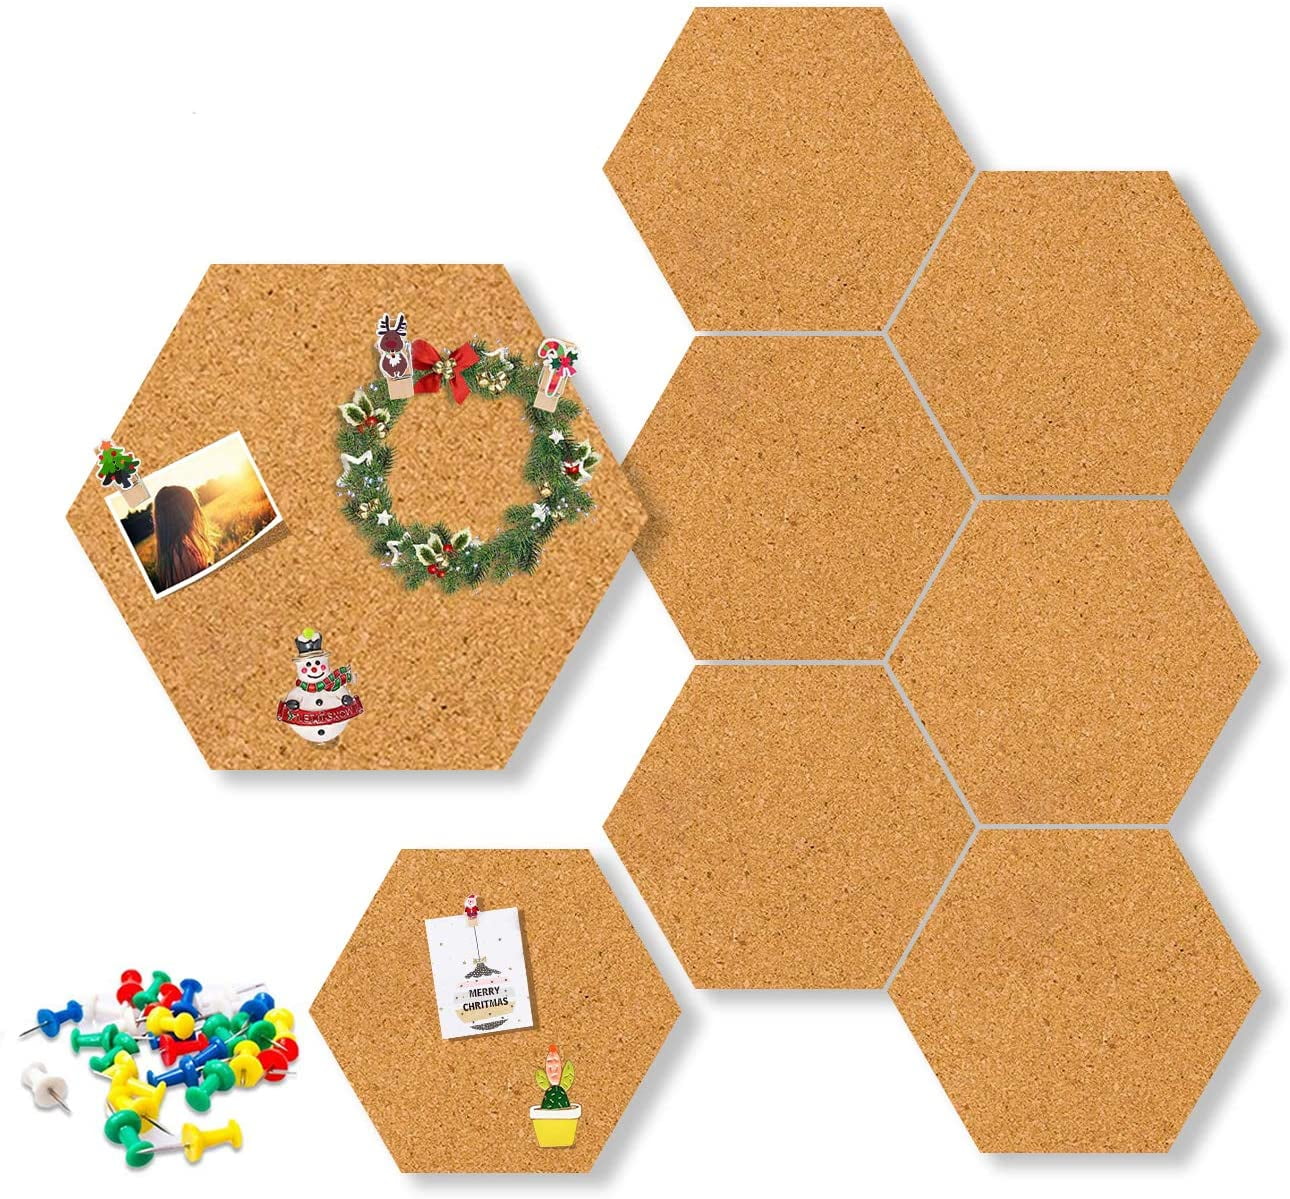 Yoillione Hexagon Felt Board Tiles Self Adhesive,Colorful Hexagon Cork Tiles 